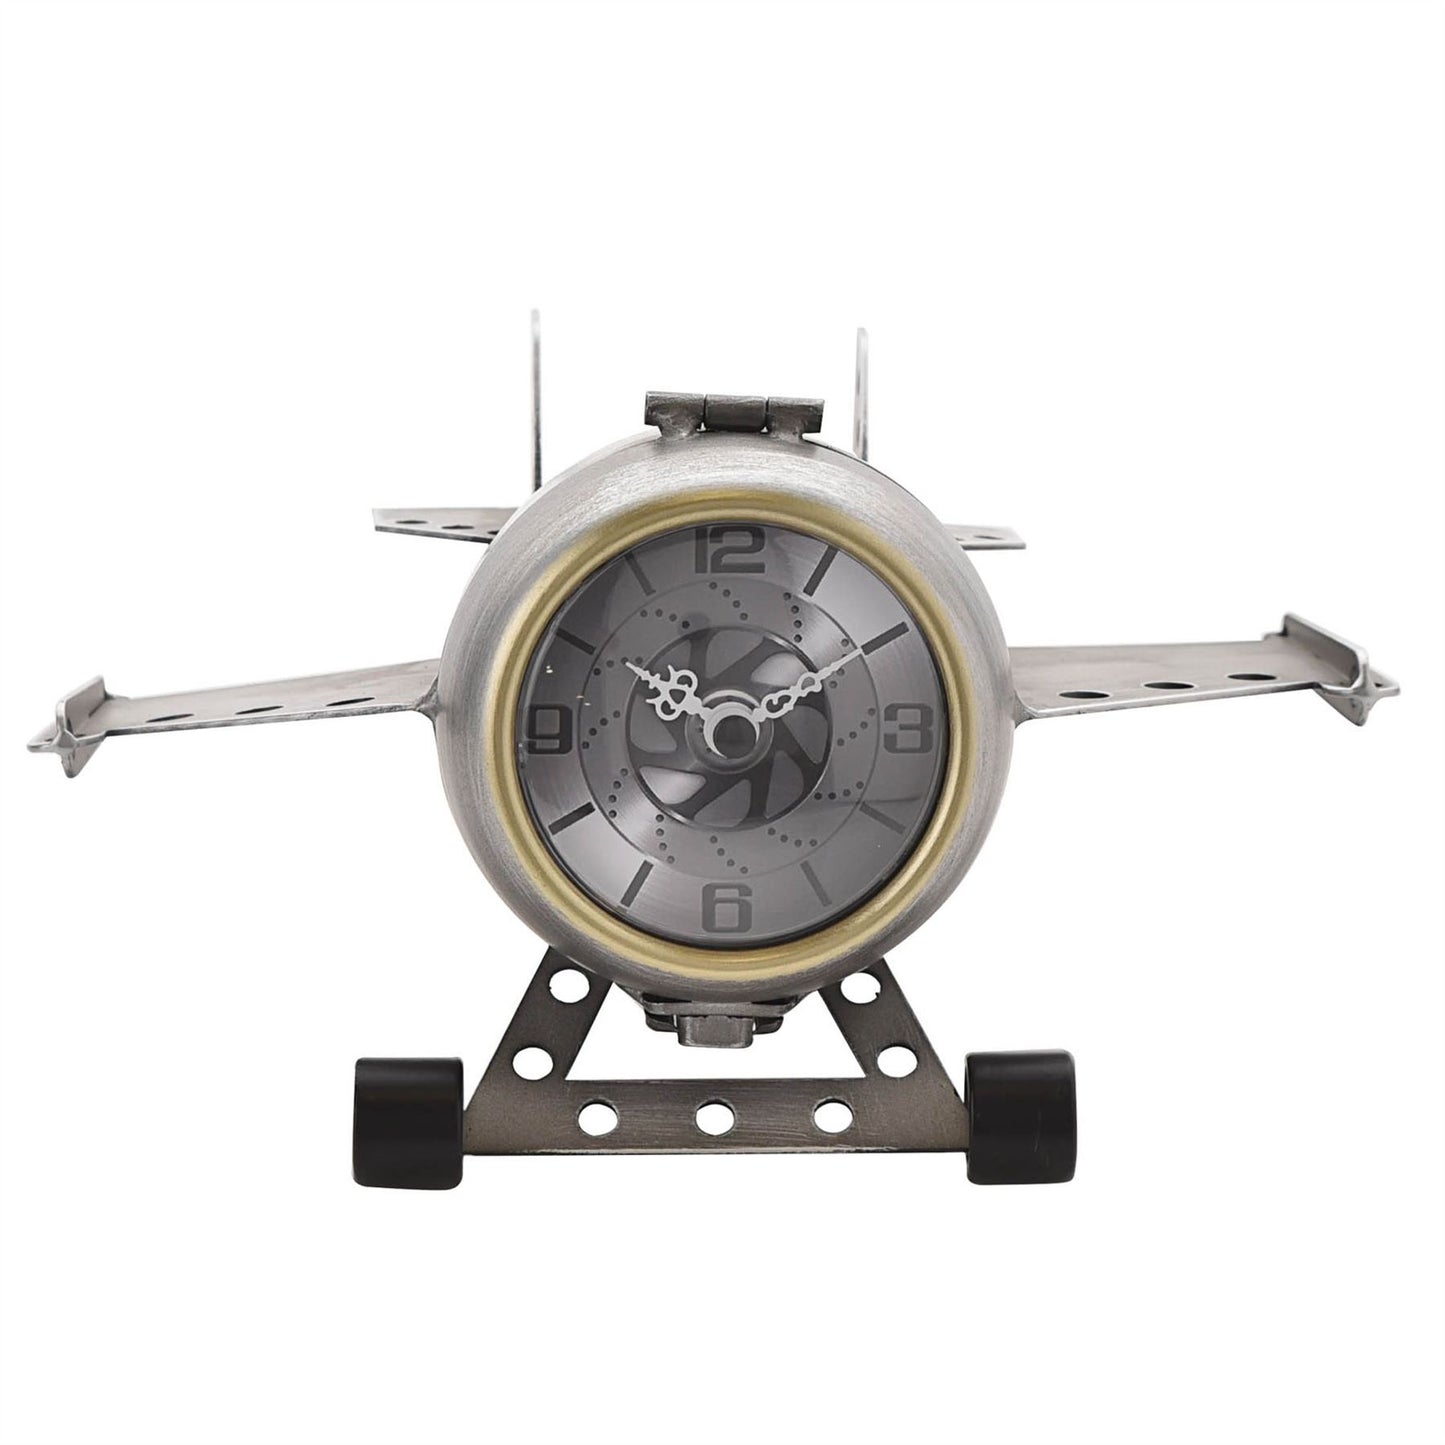 Hometime Mantel Clock Aeroplane Design